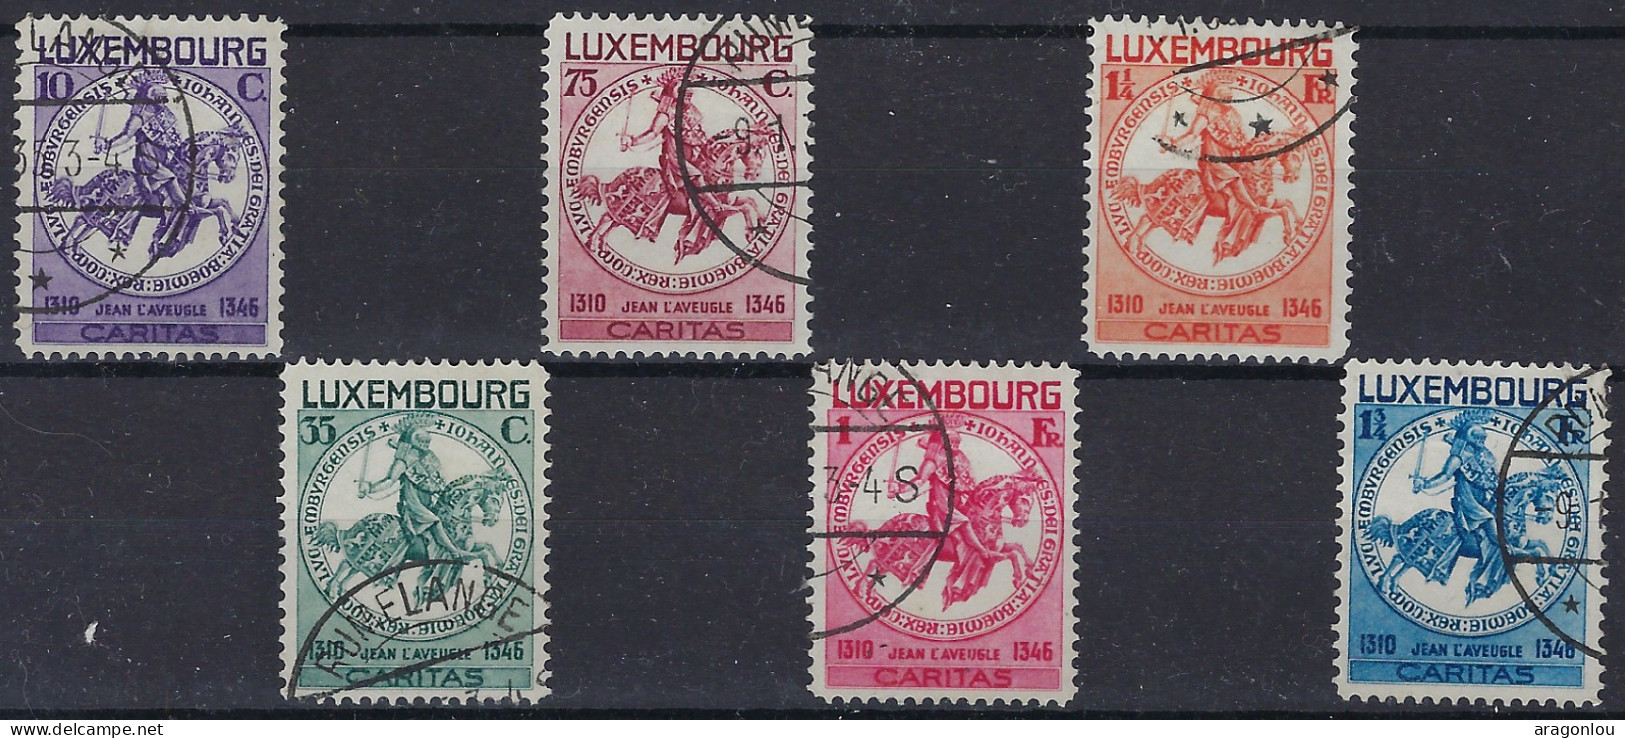 Luxembourg - Luxemburg - Timbres  1934  Série    Sceau De Jean L'Aveugle    °   VC.200,- - Gebraucht